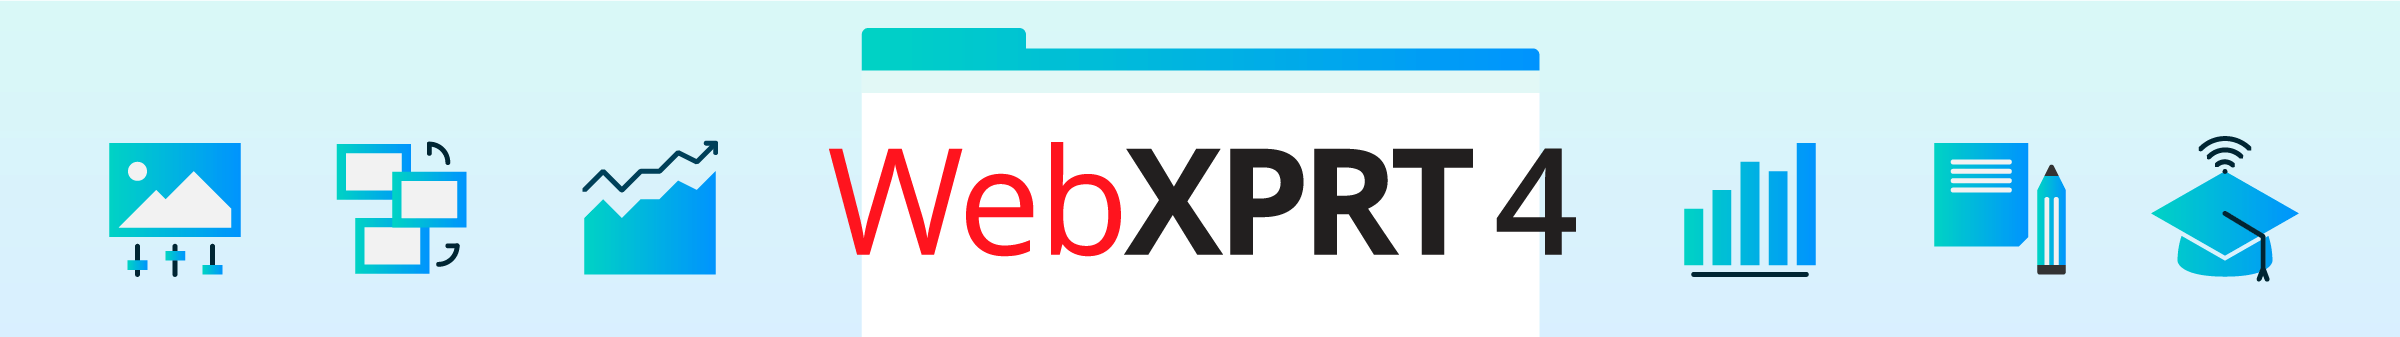 WebXPRT 4 banner